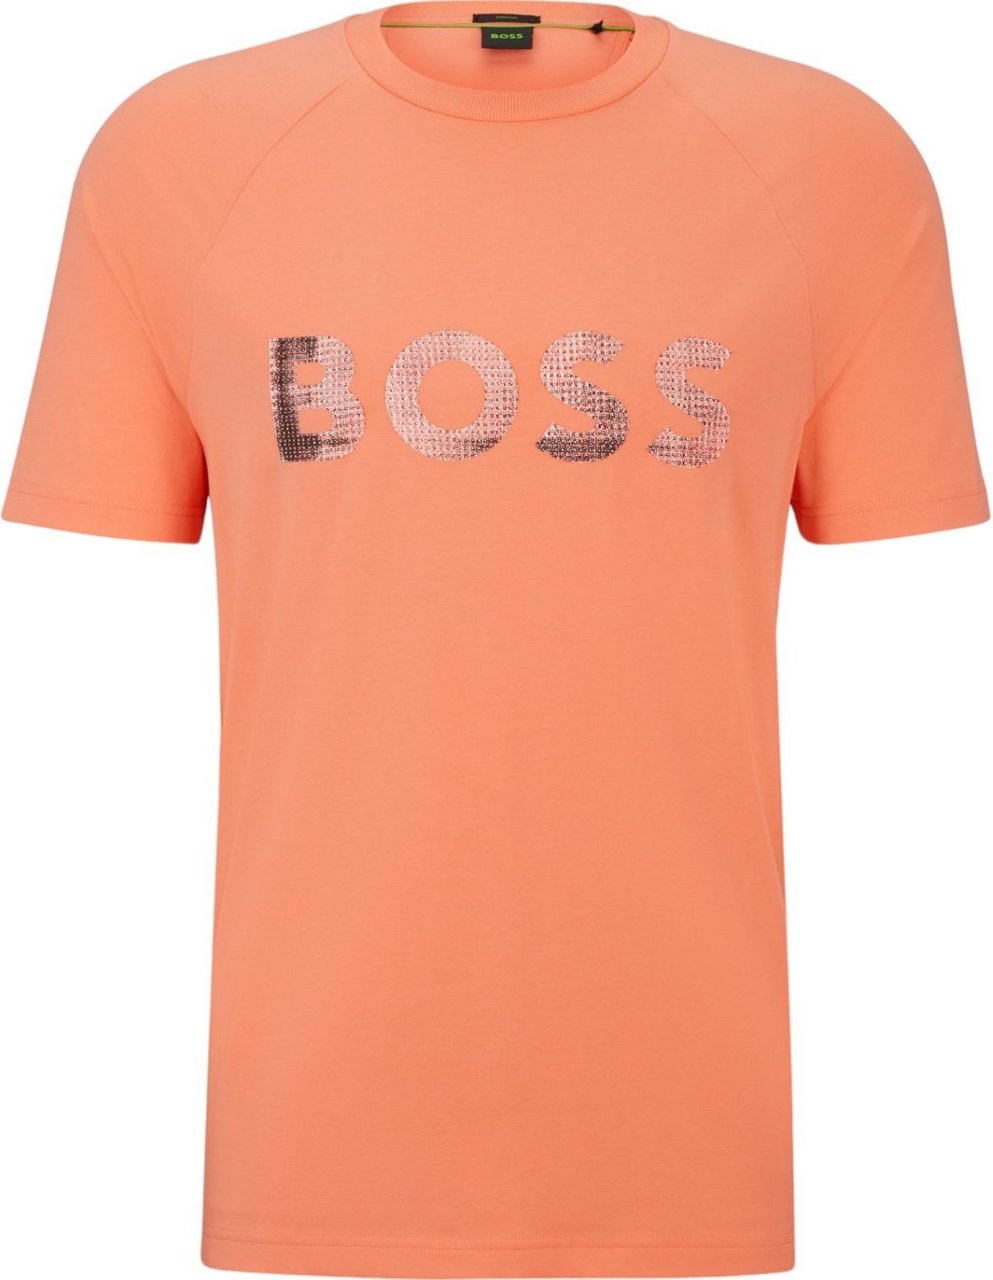 Hugo Boss Boss Heren T-shirt Rood 50512999/649 TEEBERO Rood